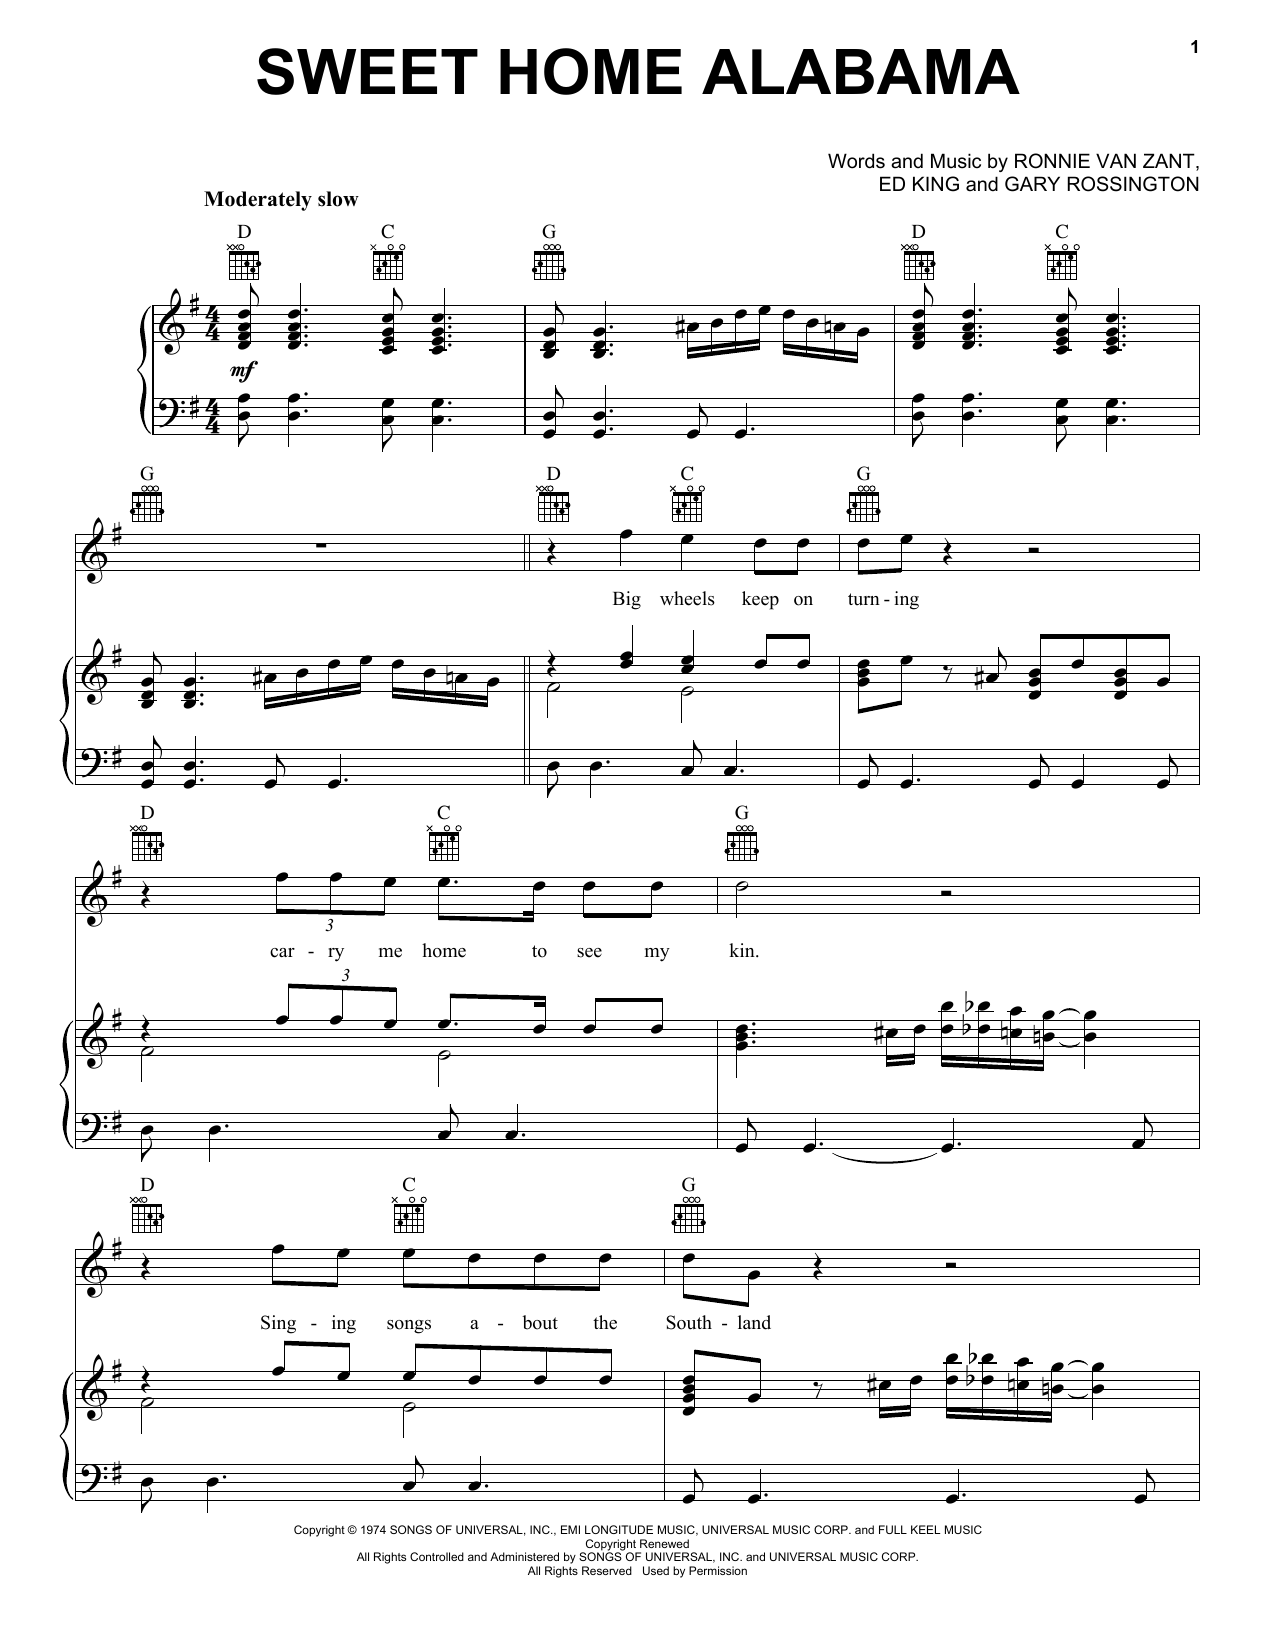 Lynyrd Skynyrd Sweet Home Alabama Sheet Music Notes & Chords for Bass Guitar Tab - Download or Print PDF